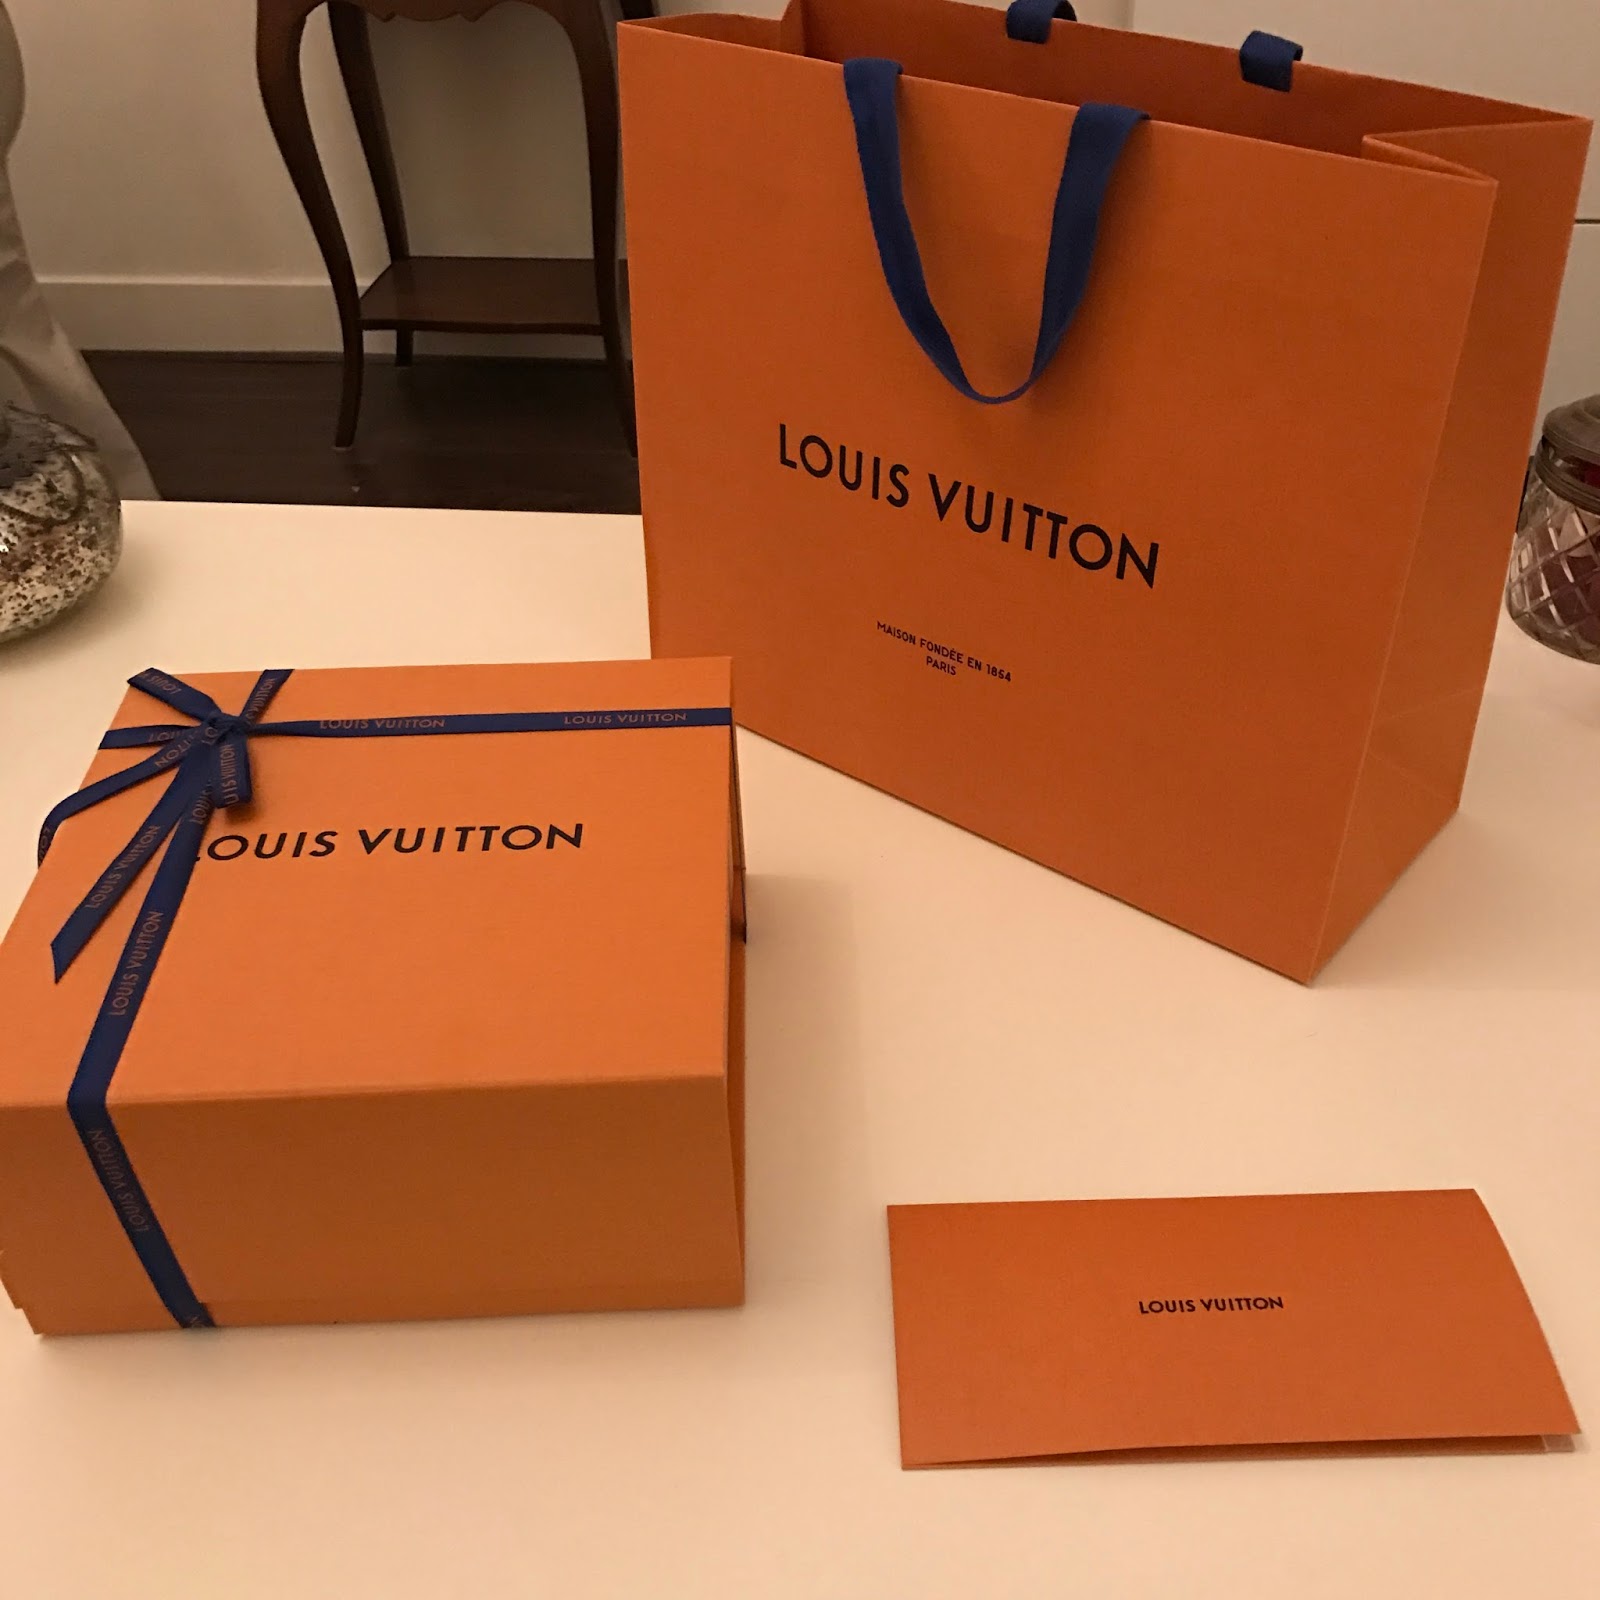 Louis Vuitton Maison Fondee En 1854 Paris – Ventana Blog